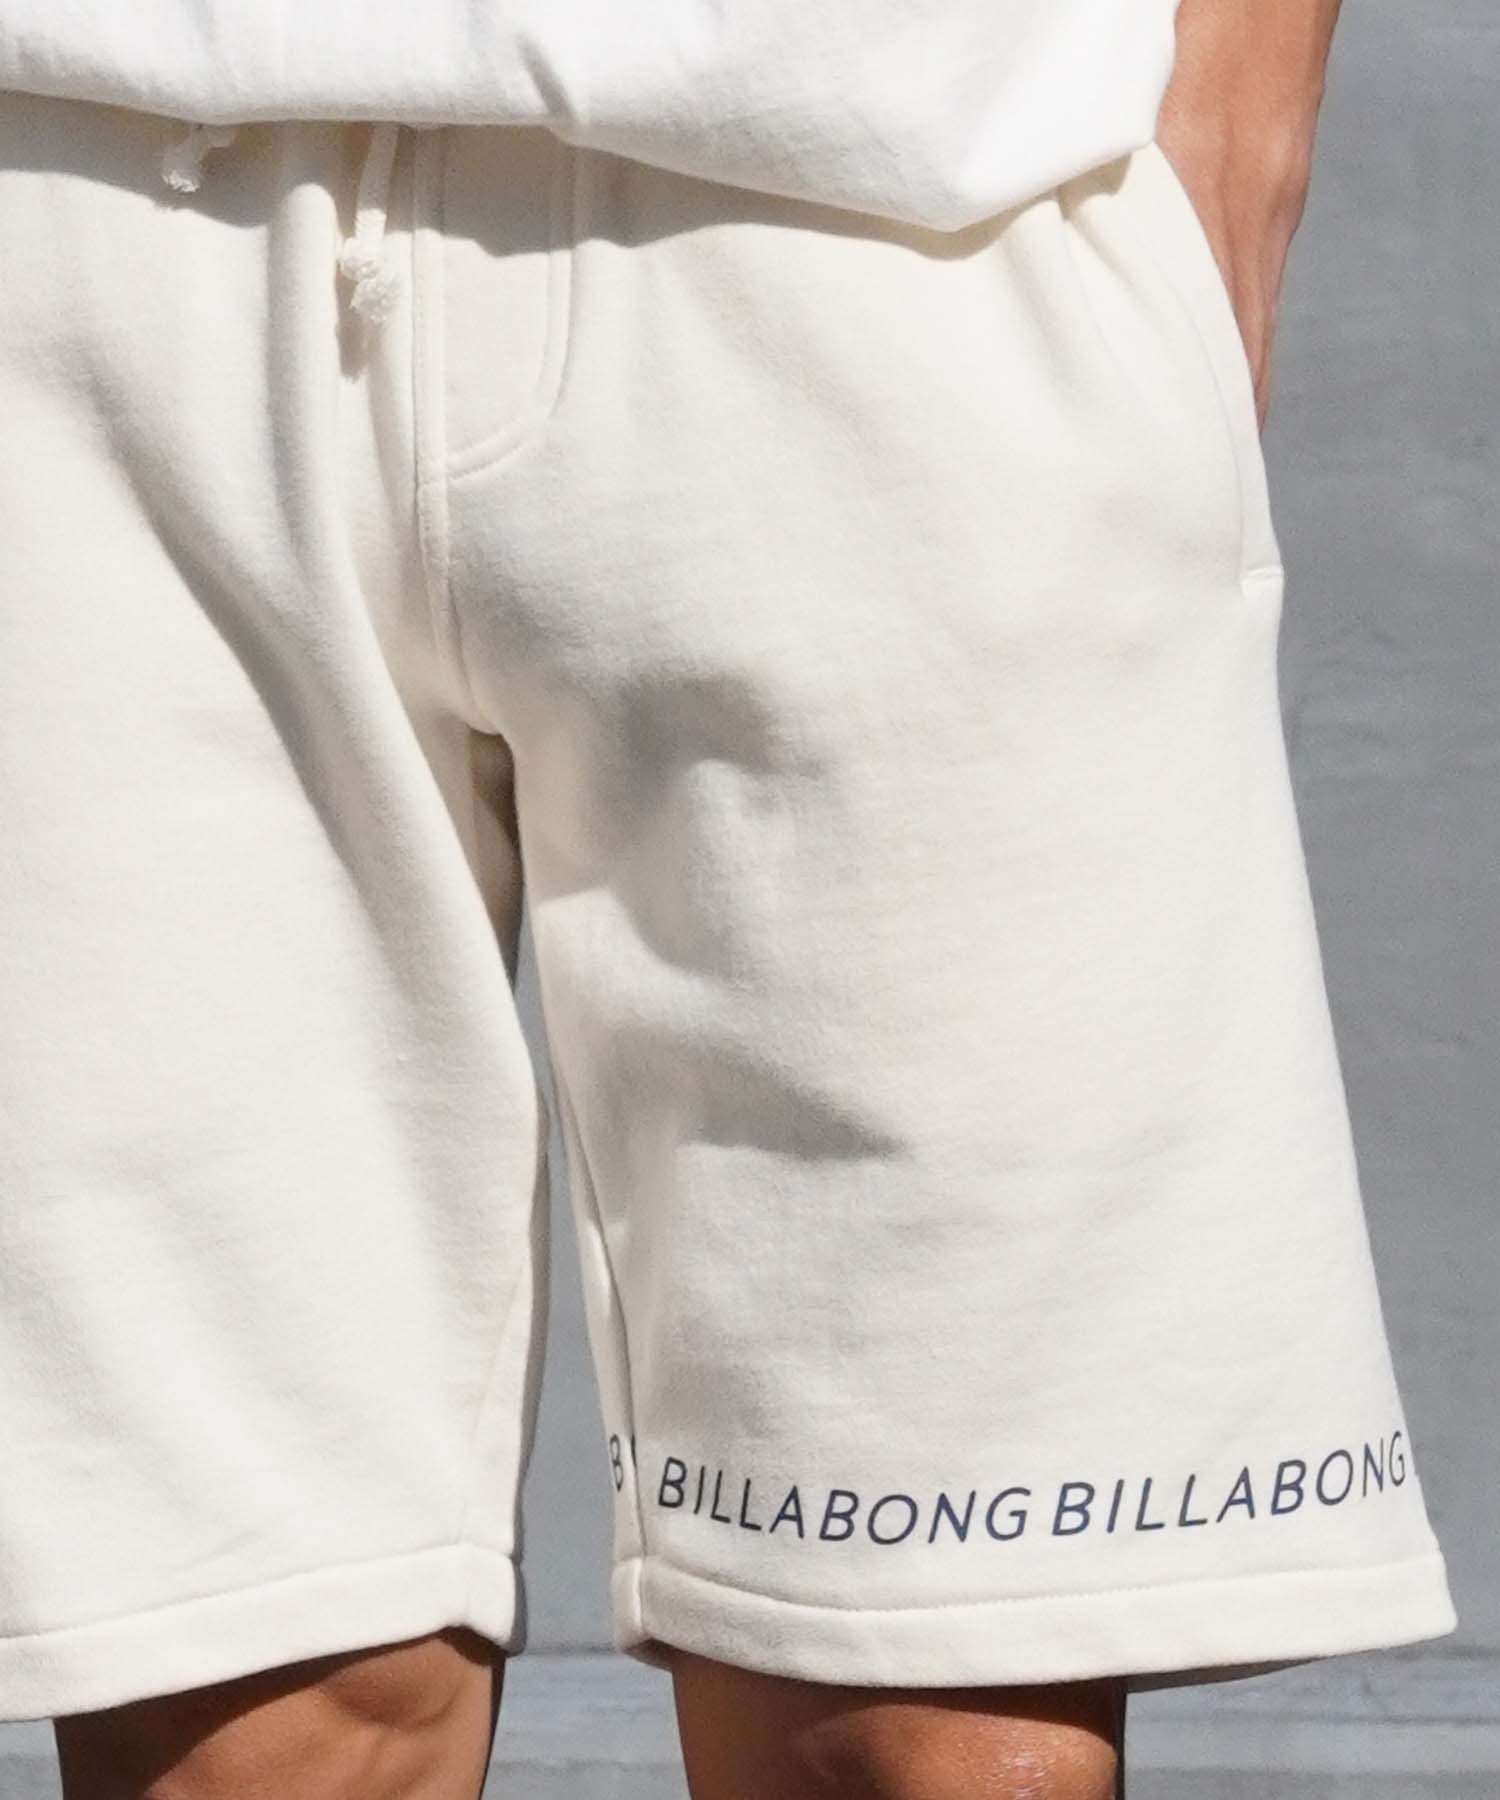 BILLABONG ビラボン LOGO PRINT SHORTS メンズ ショートパンツ ショーツ スウェット ロゴ 裏ピーチ起毛 BE011-605(GRH-M)